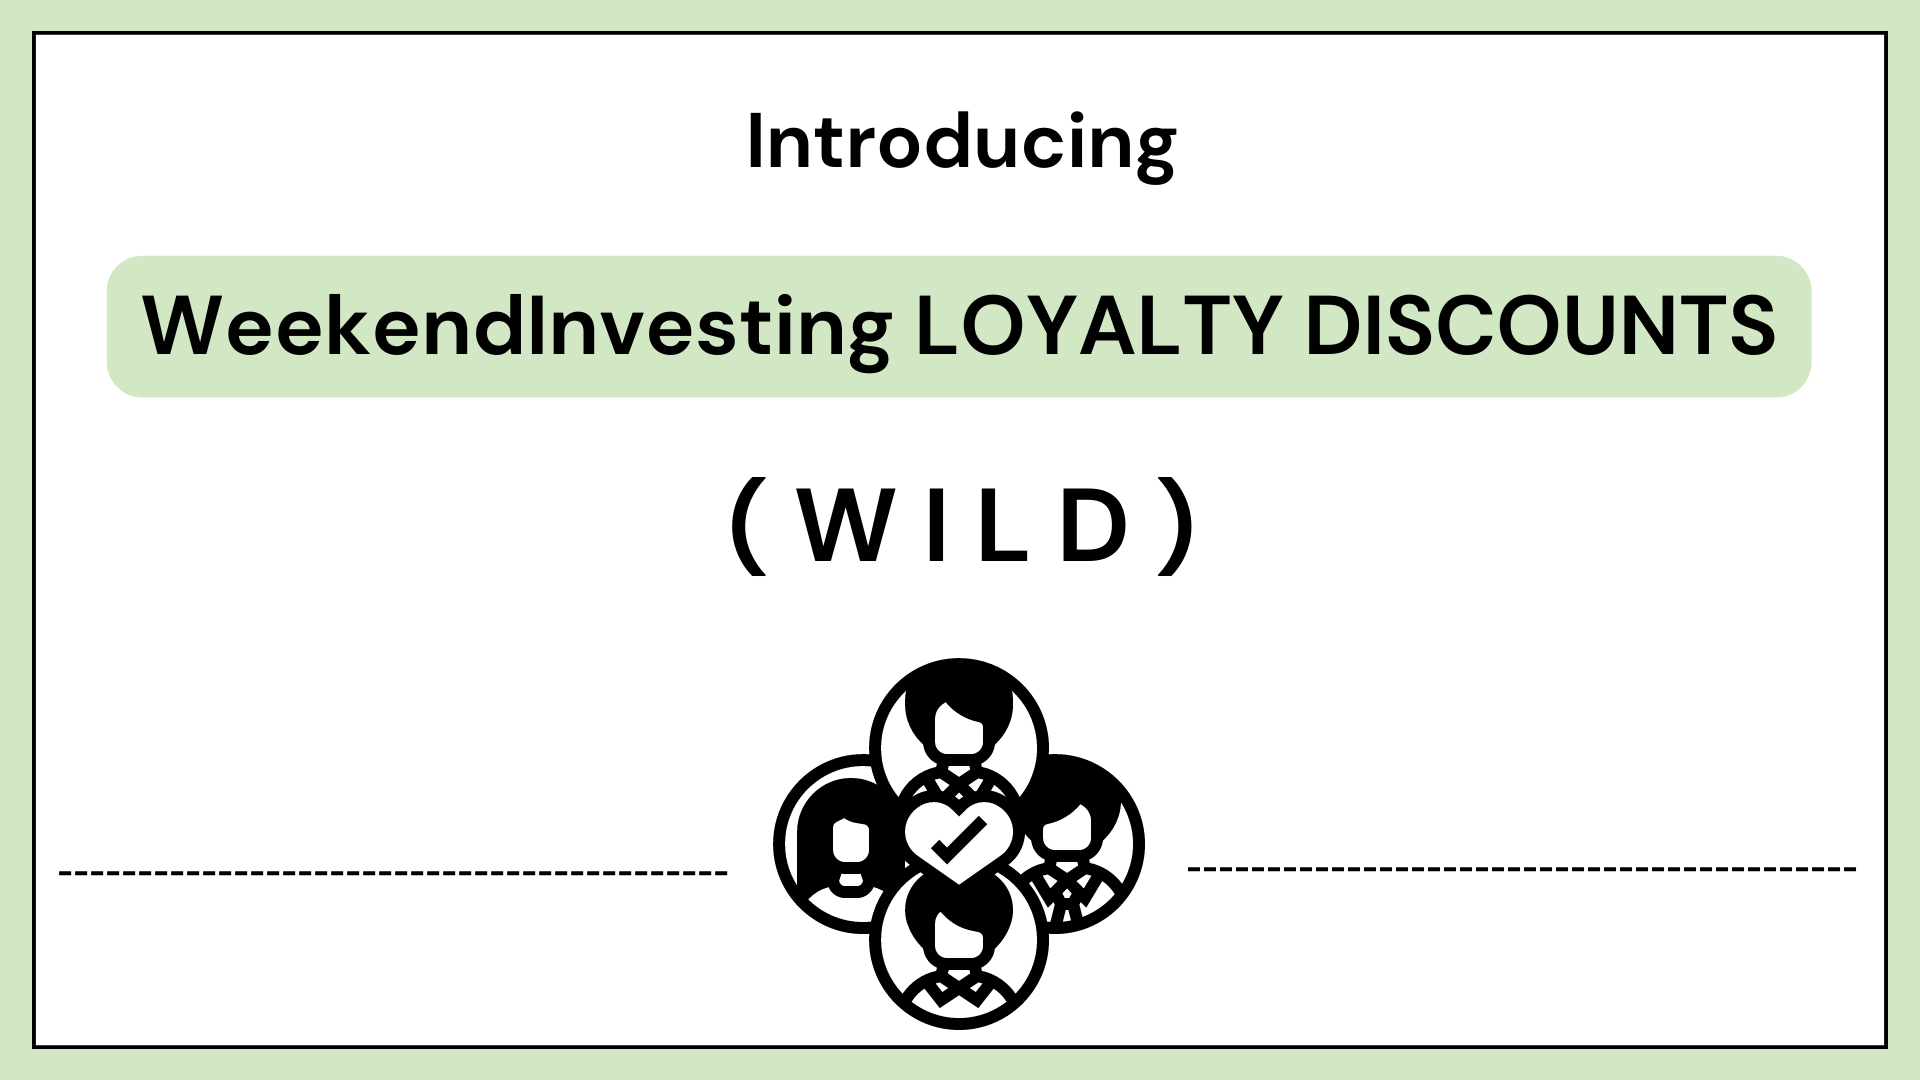 Introducing WeekendInvesting Loyalty Discounts